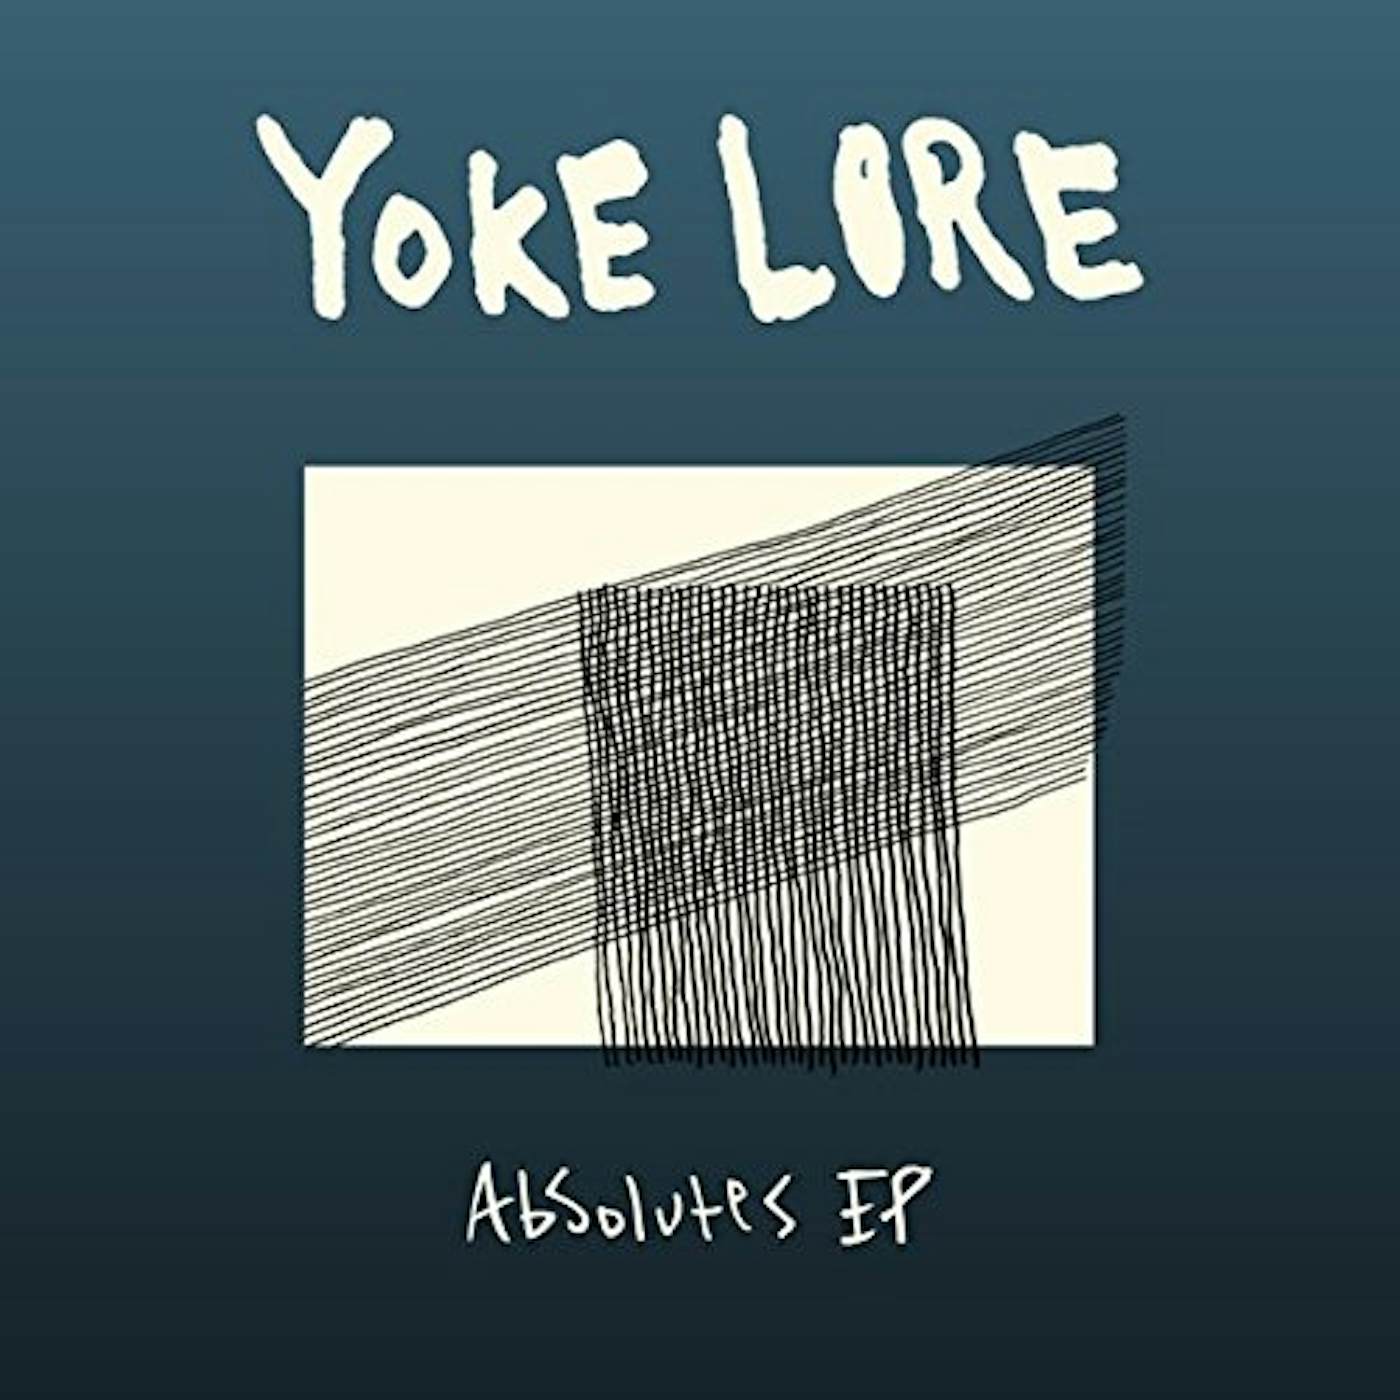 Yoke Lore ABSOLUTES EP (10 INCH) Vinyl Record